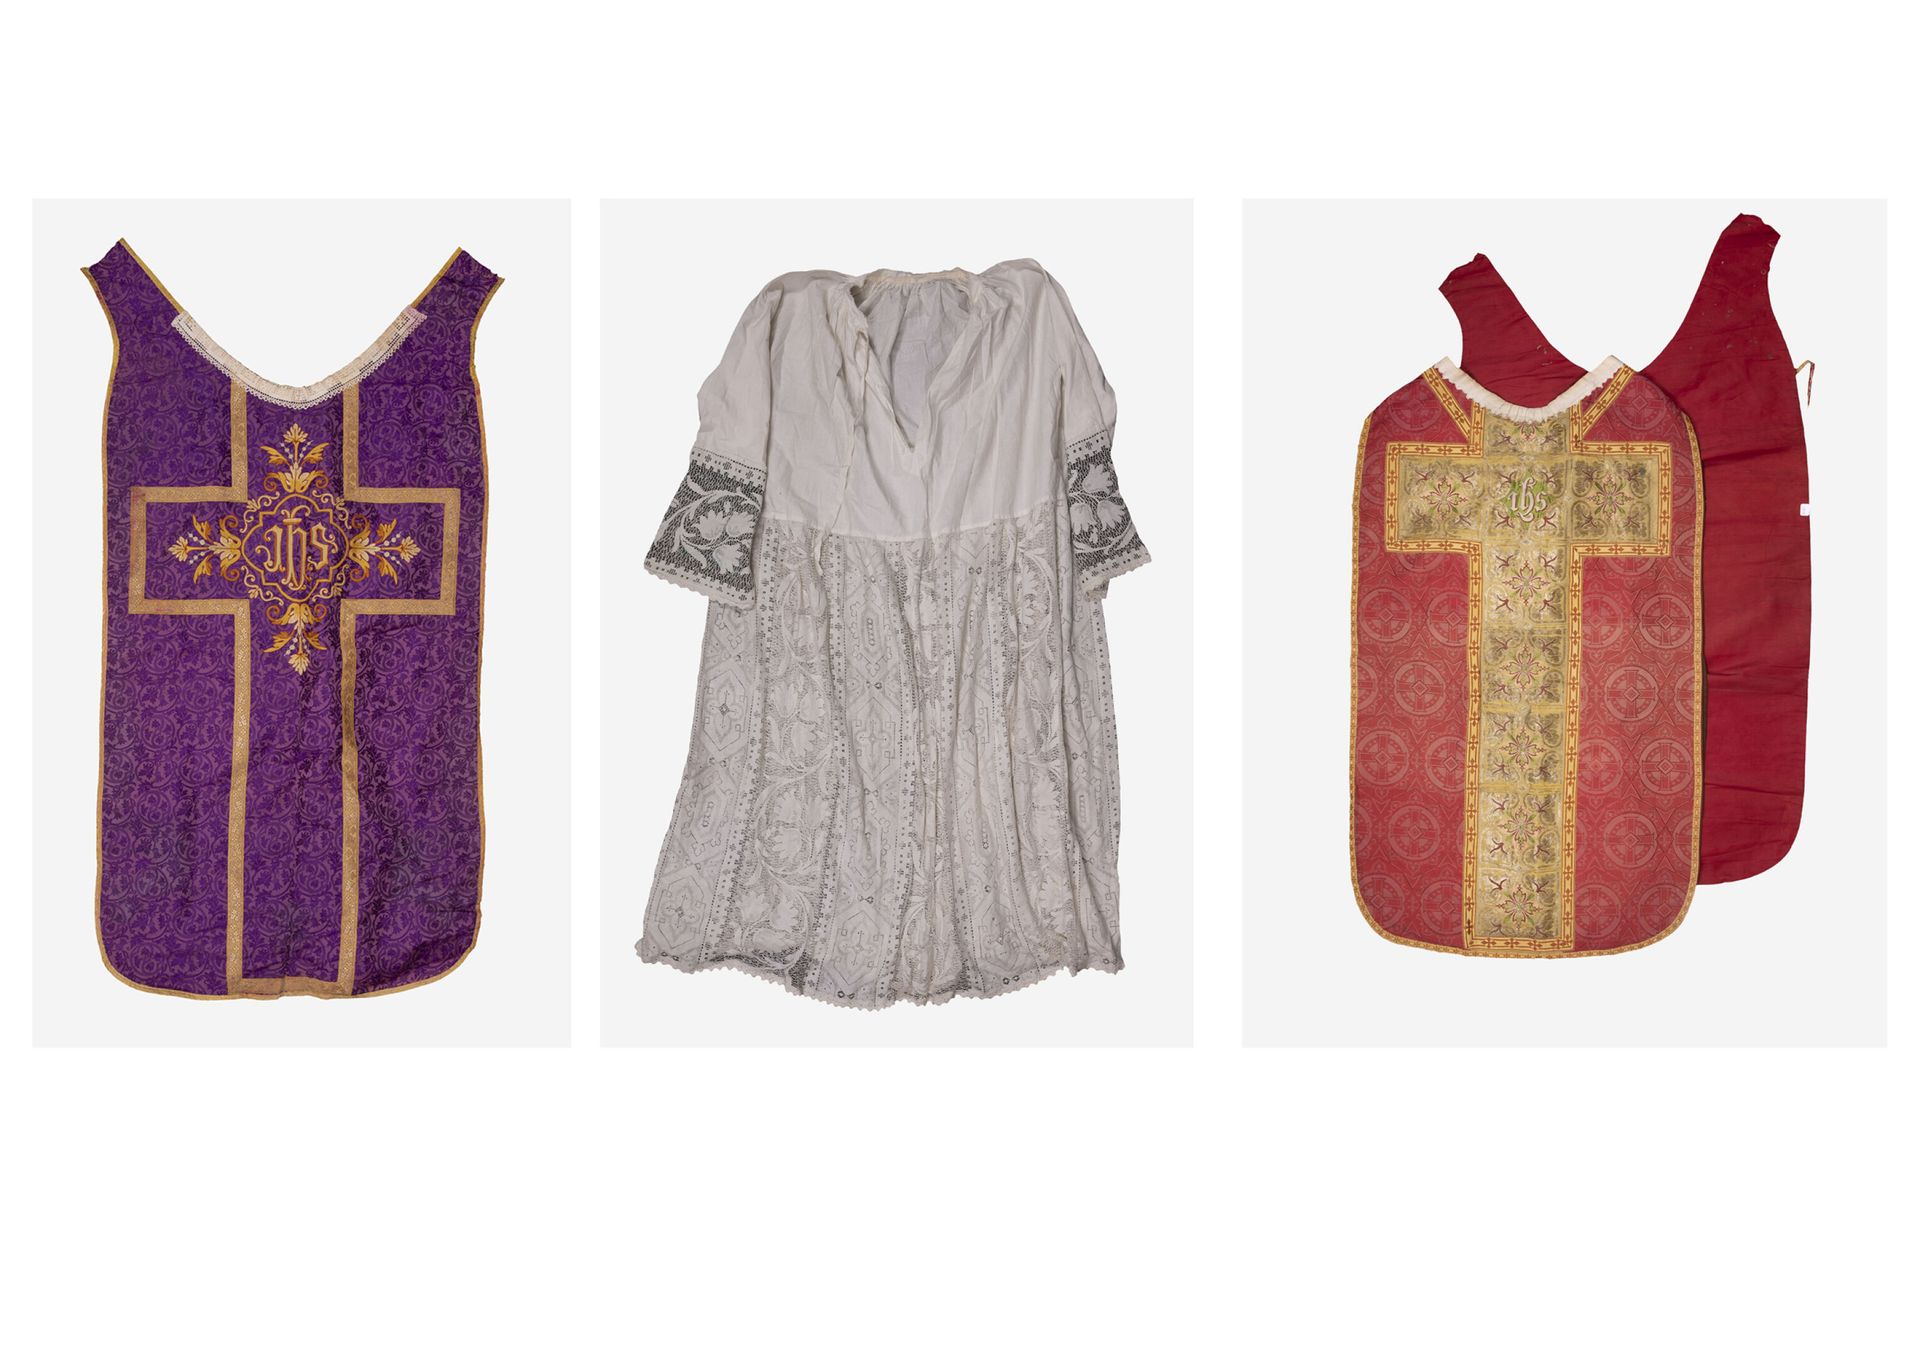 Vêtements liturgiques. - 多色袍，红色背景，黄色边框，有十字架和花的图案。

丝和棉。

长度：111厘米。

- 紫色背景的多色袍子的&hellip;